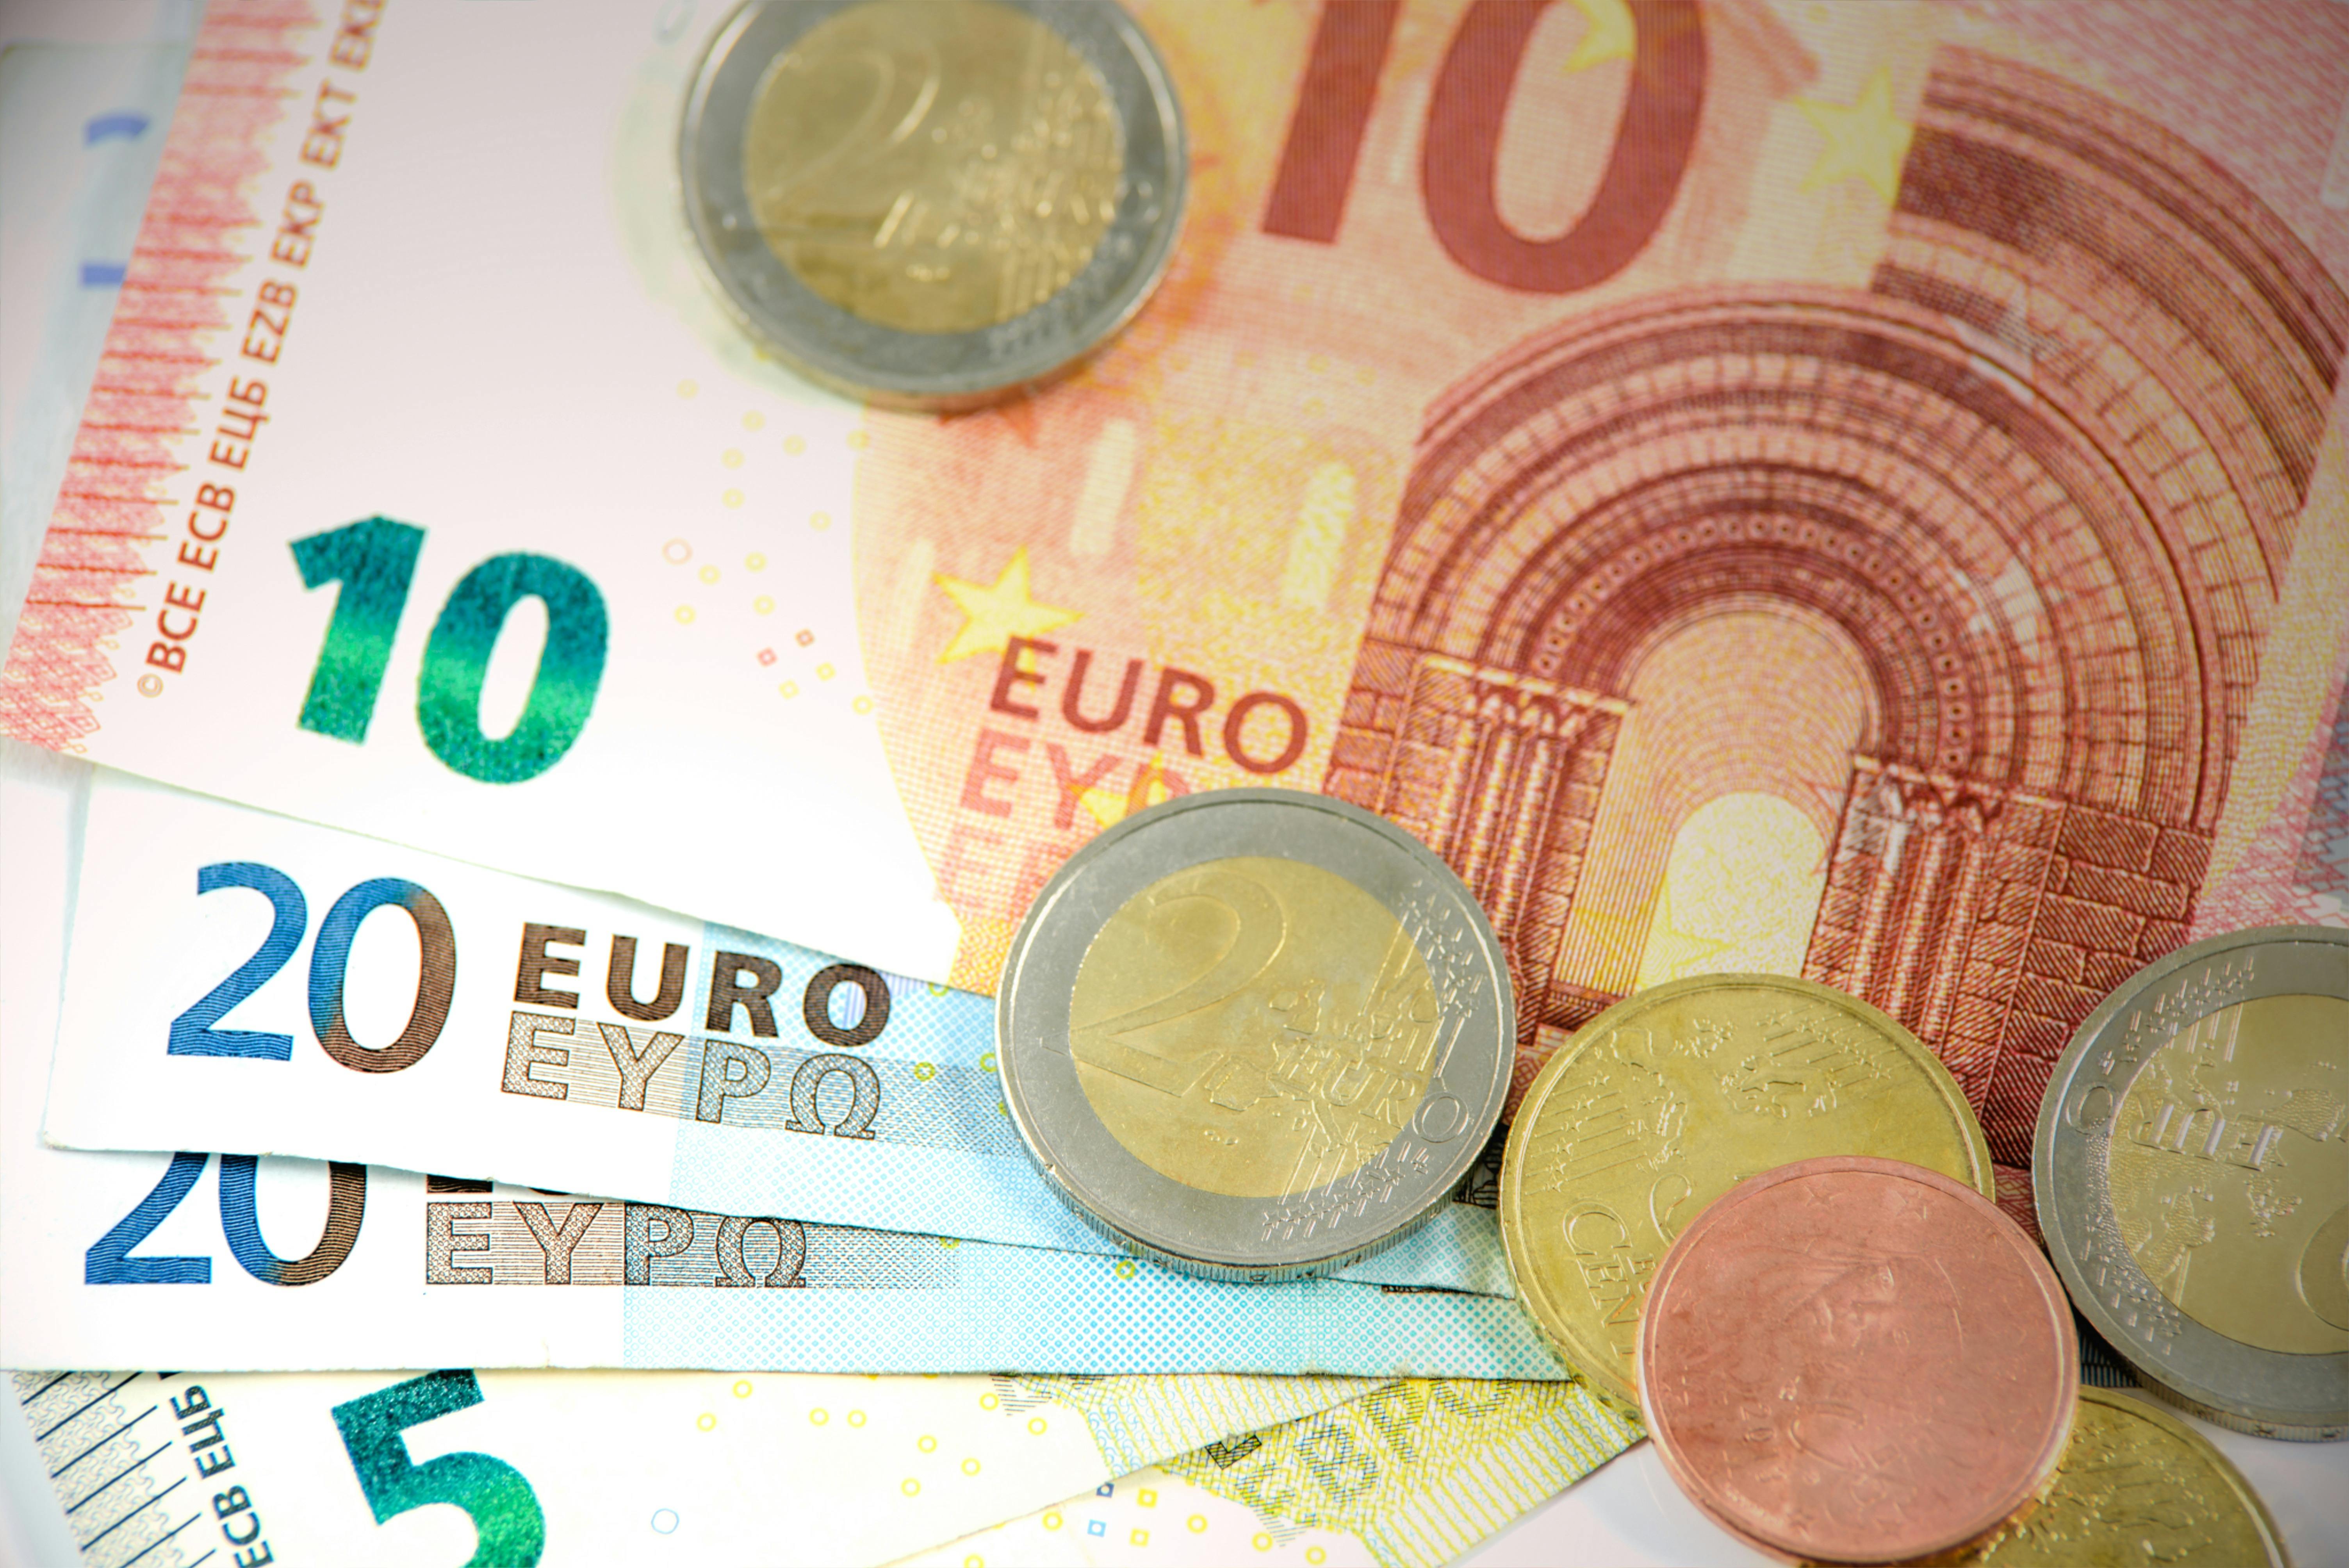 Moneda 5 Euros Dinero - Imagen gratis en Pixabay - Pixabay